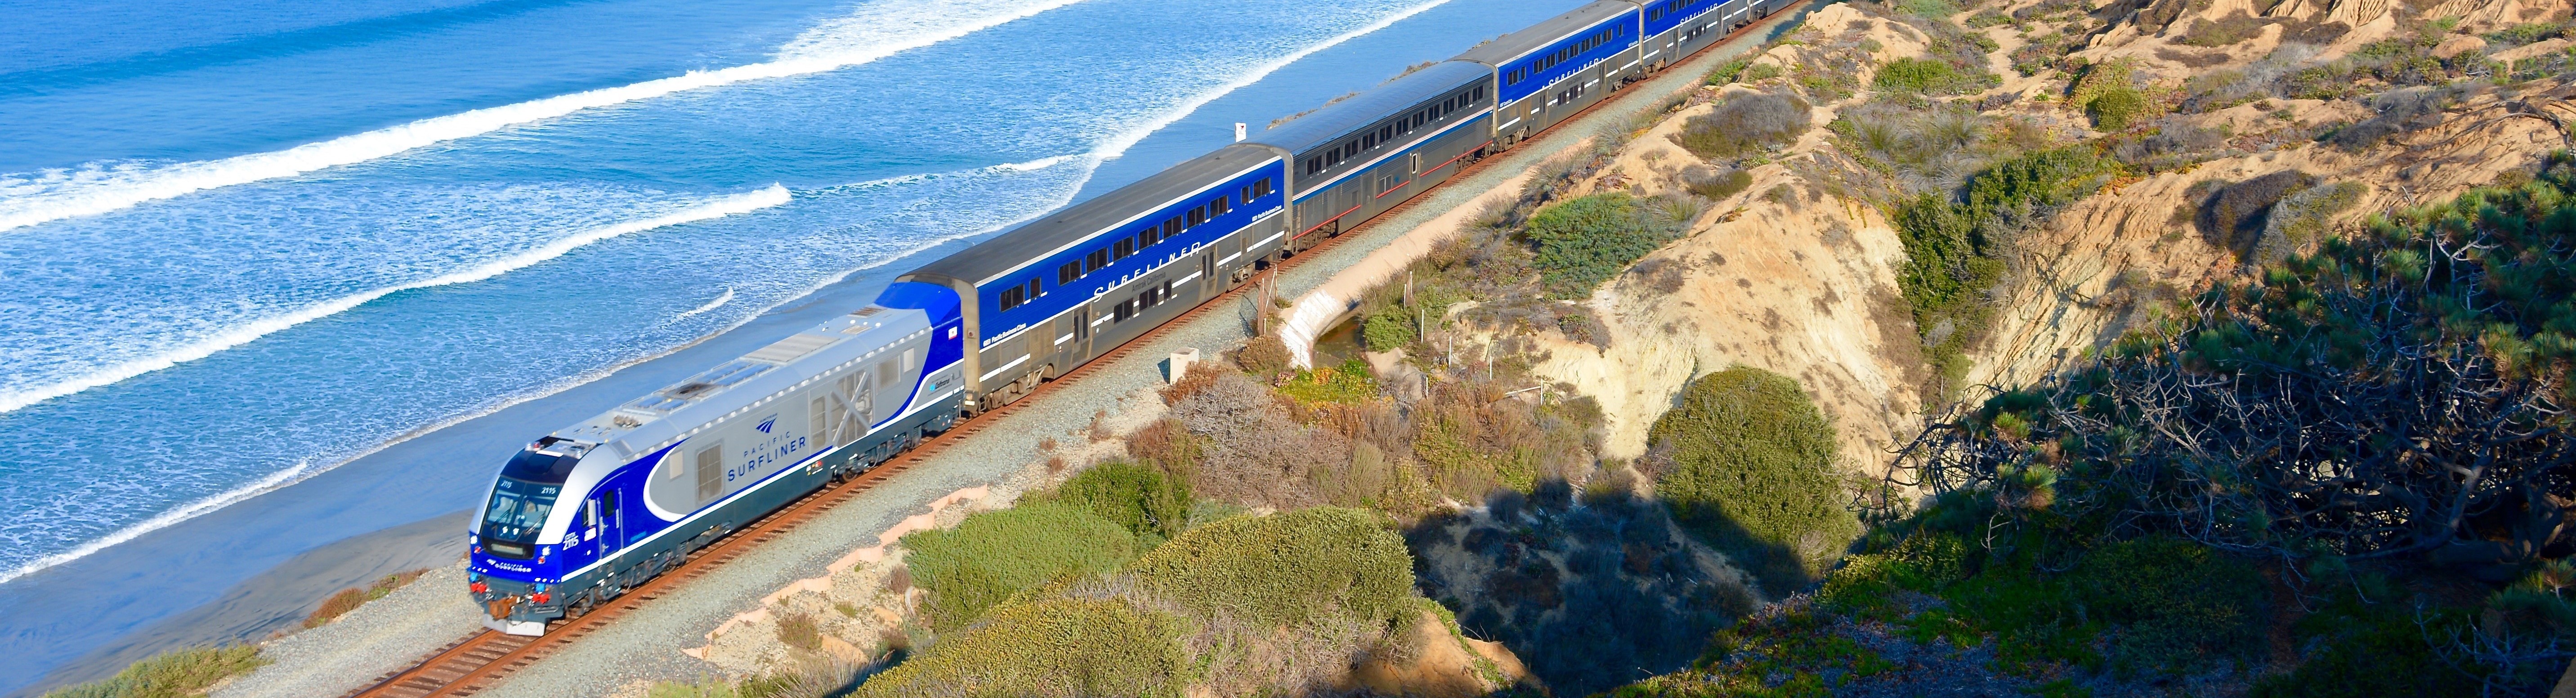 Amtrak Pacific Surfliner